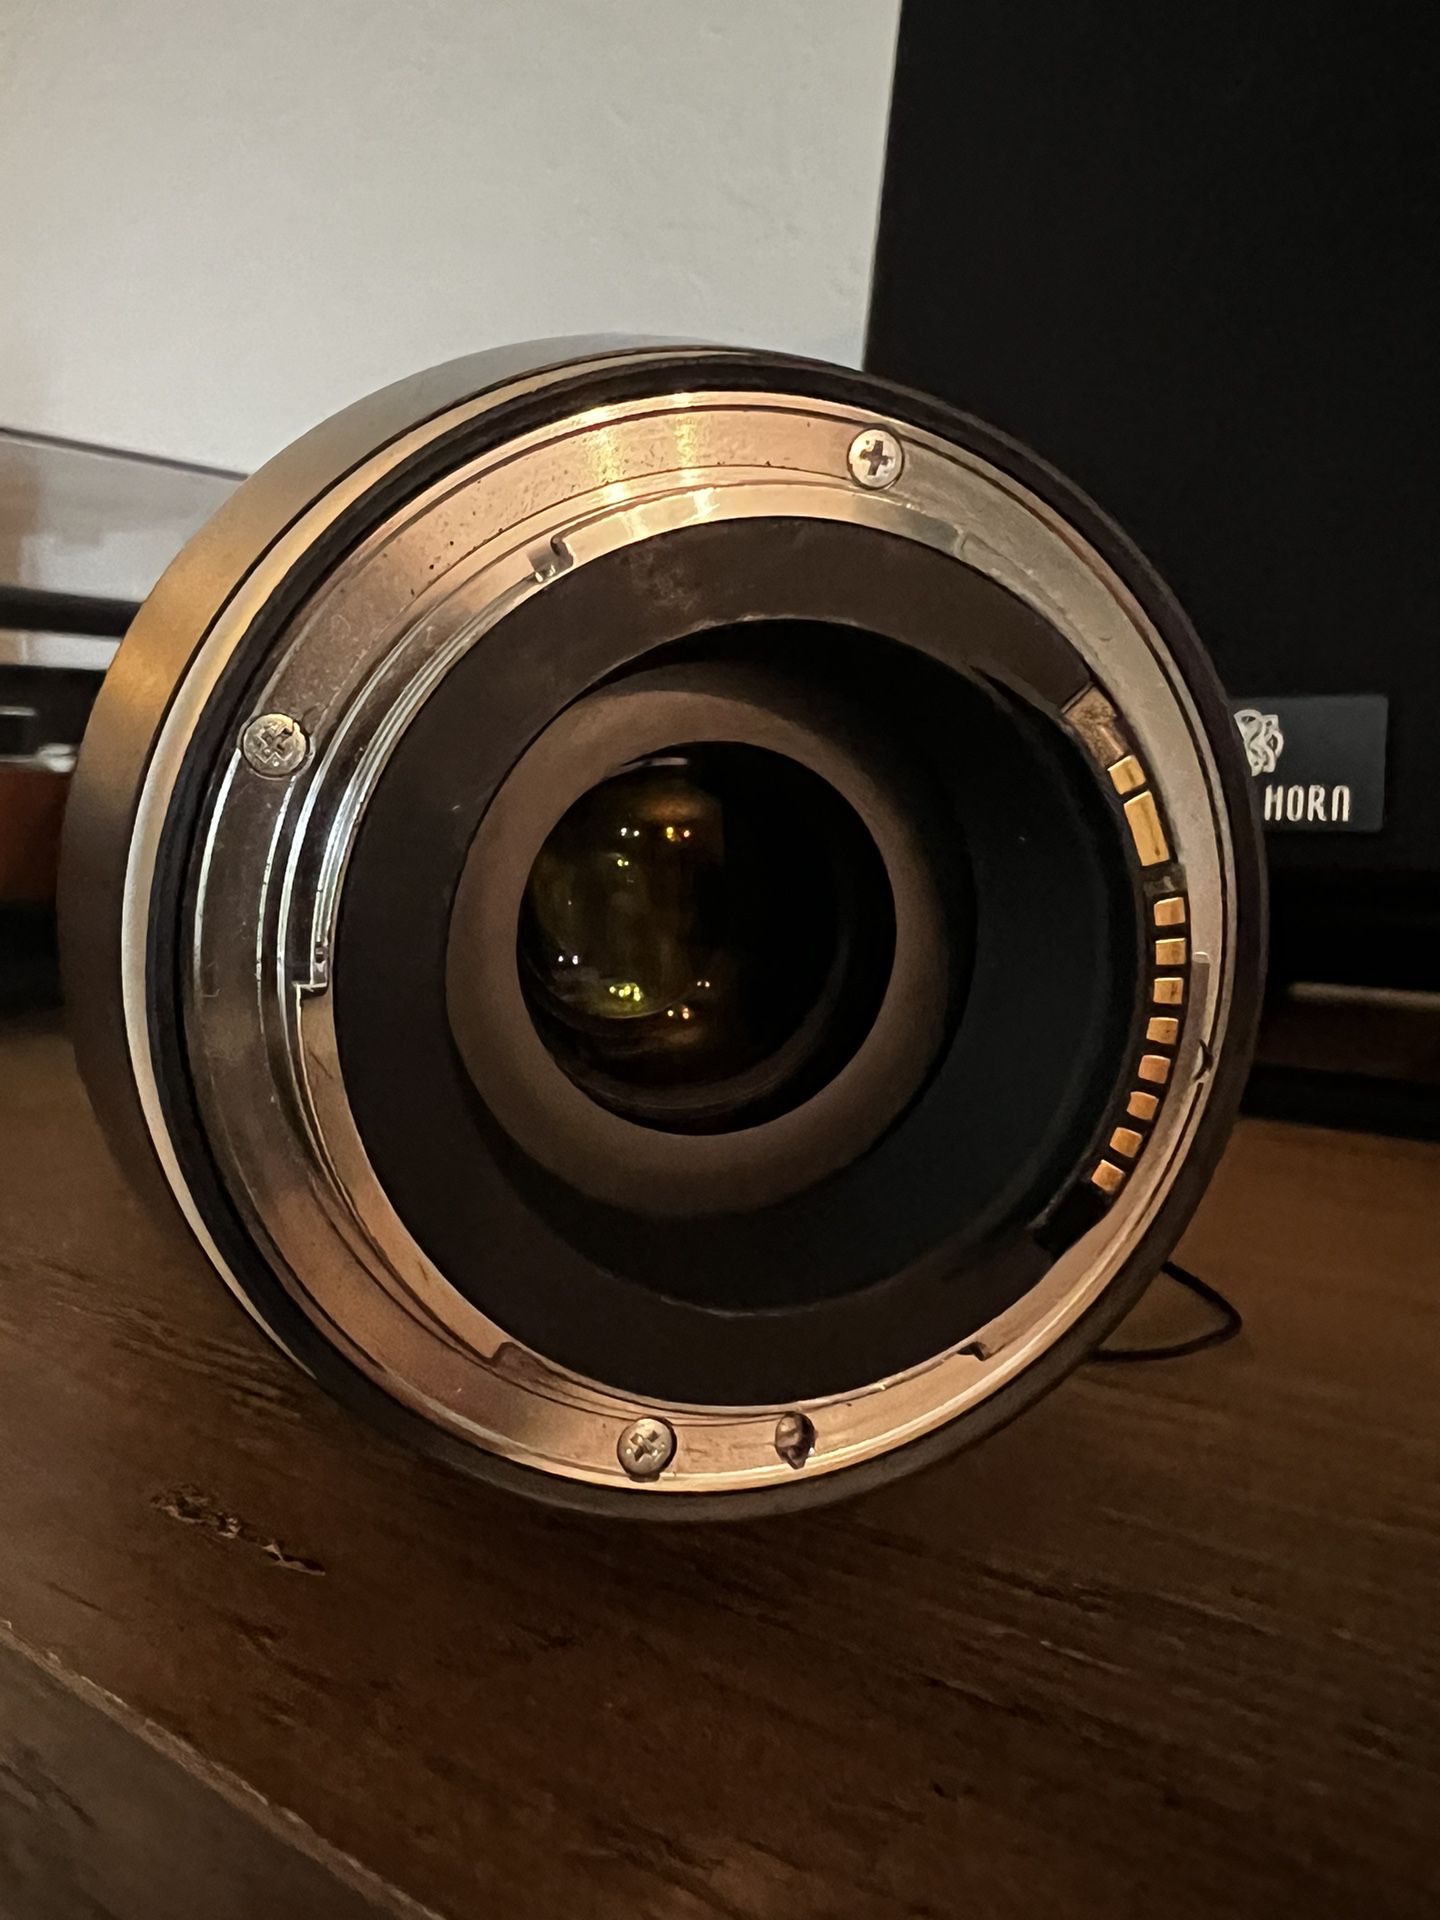 Tamron 100-400mm F/4.5-6.3 telephoto Lens